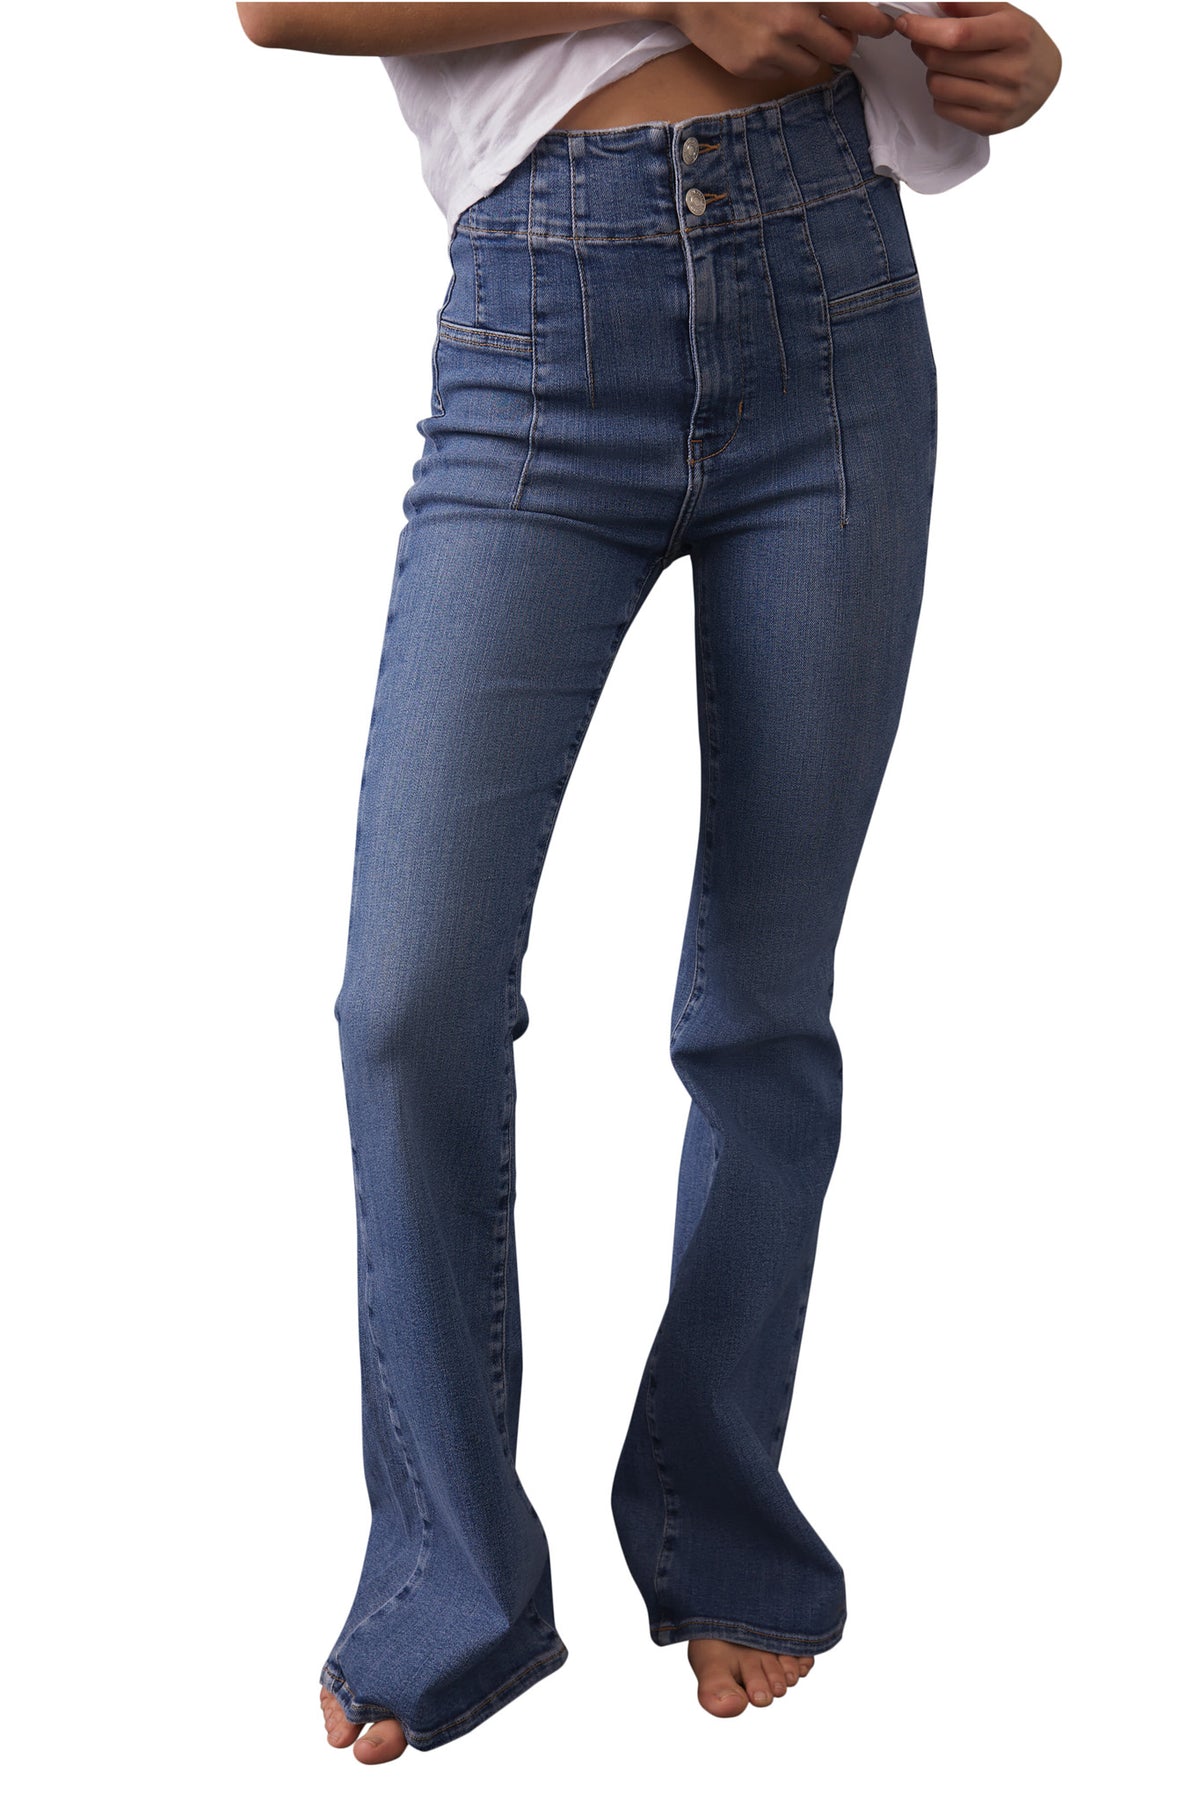 Sunburst Blue Jayde Flare Jeans // Free People *25-32*, Women's Clothing